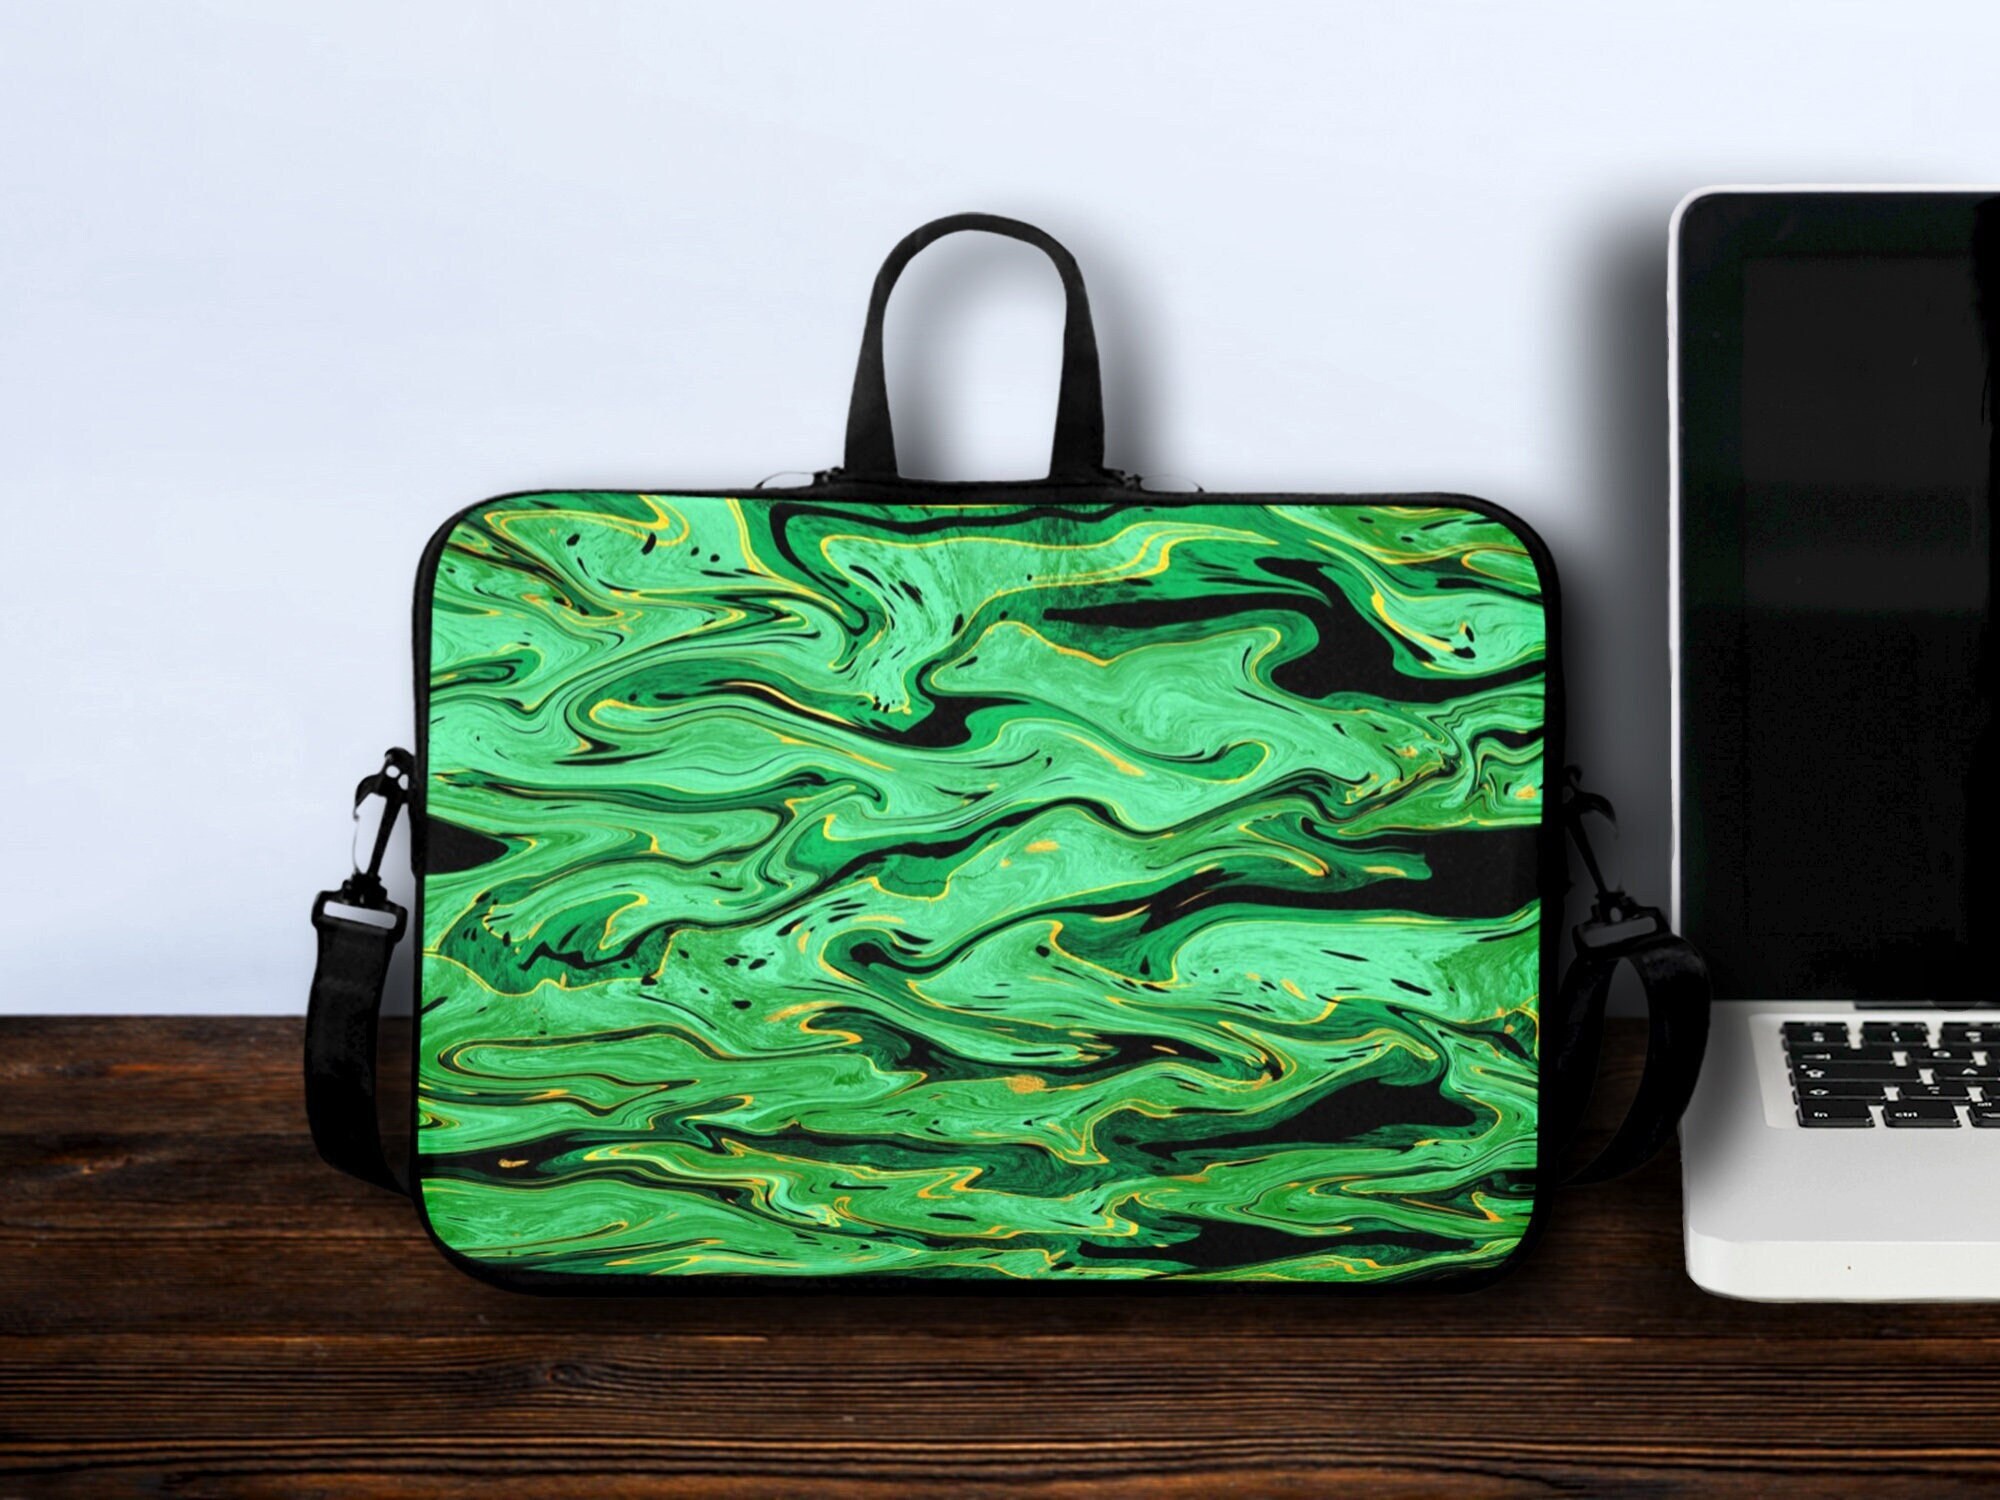 Borsa per computer verde smeraldo con cinturino, custodia con cerniera per  tablet con arte in marmo